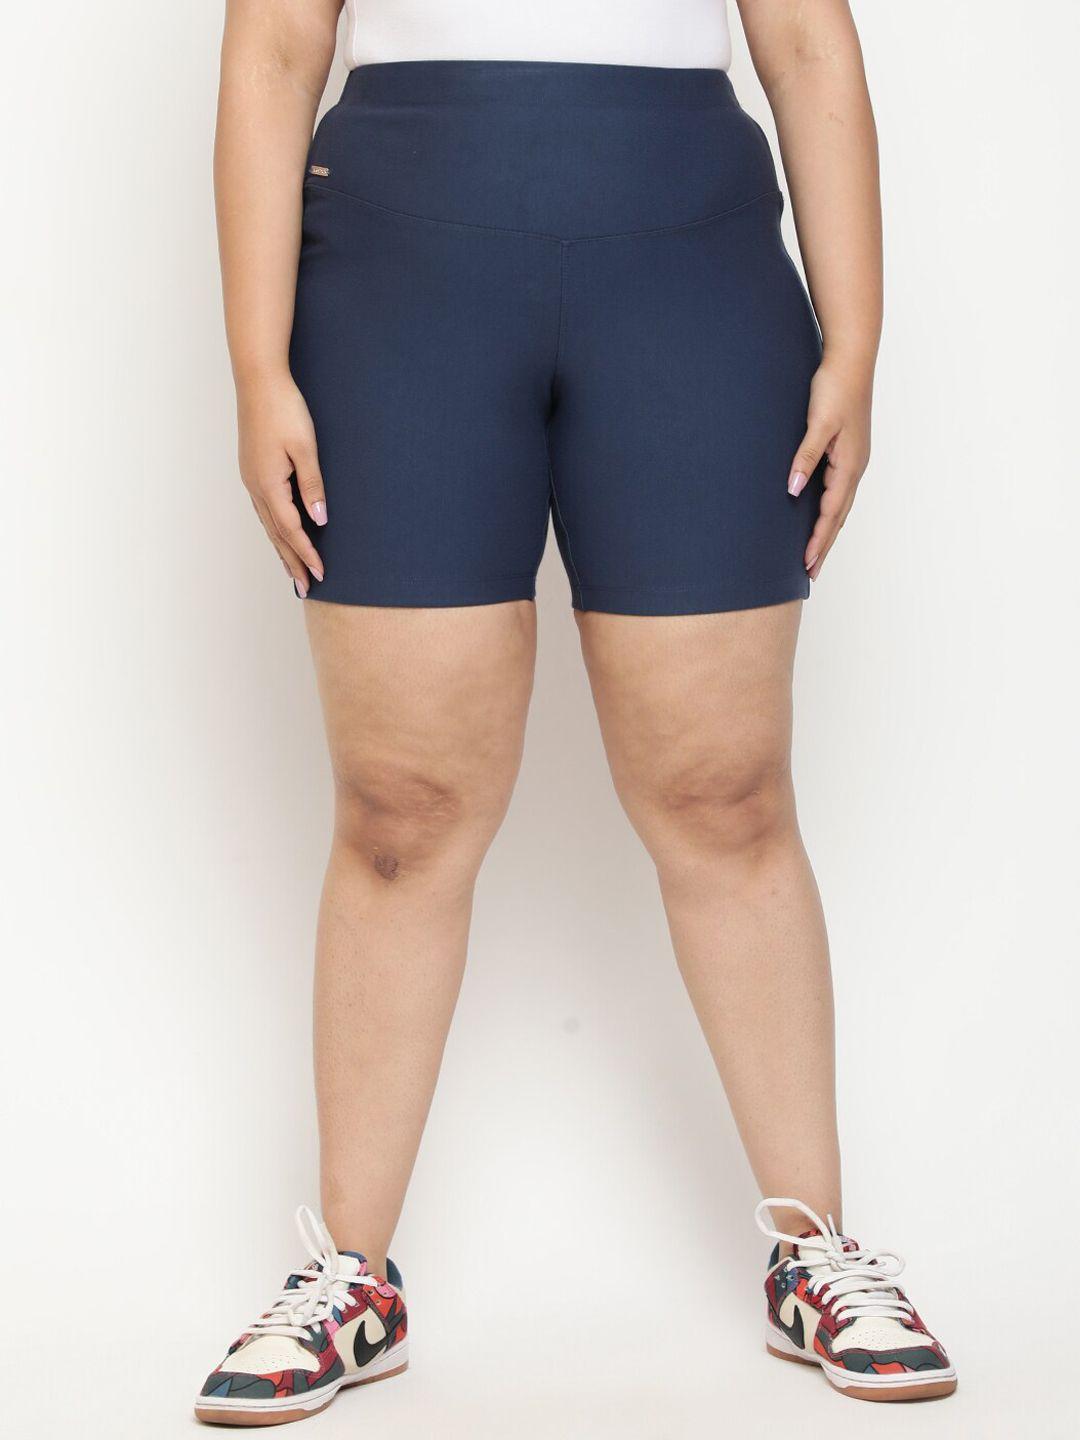 amydus women high-rise tummy shaper shorts